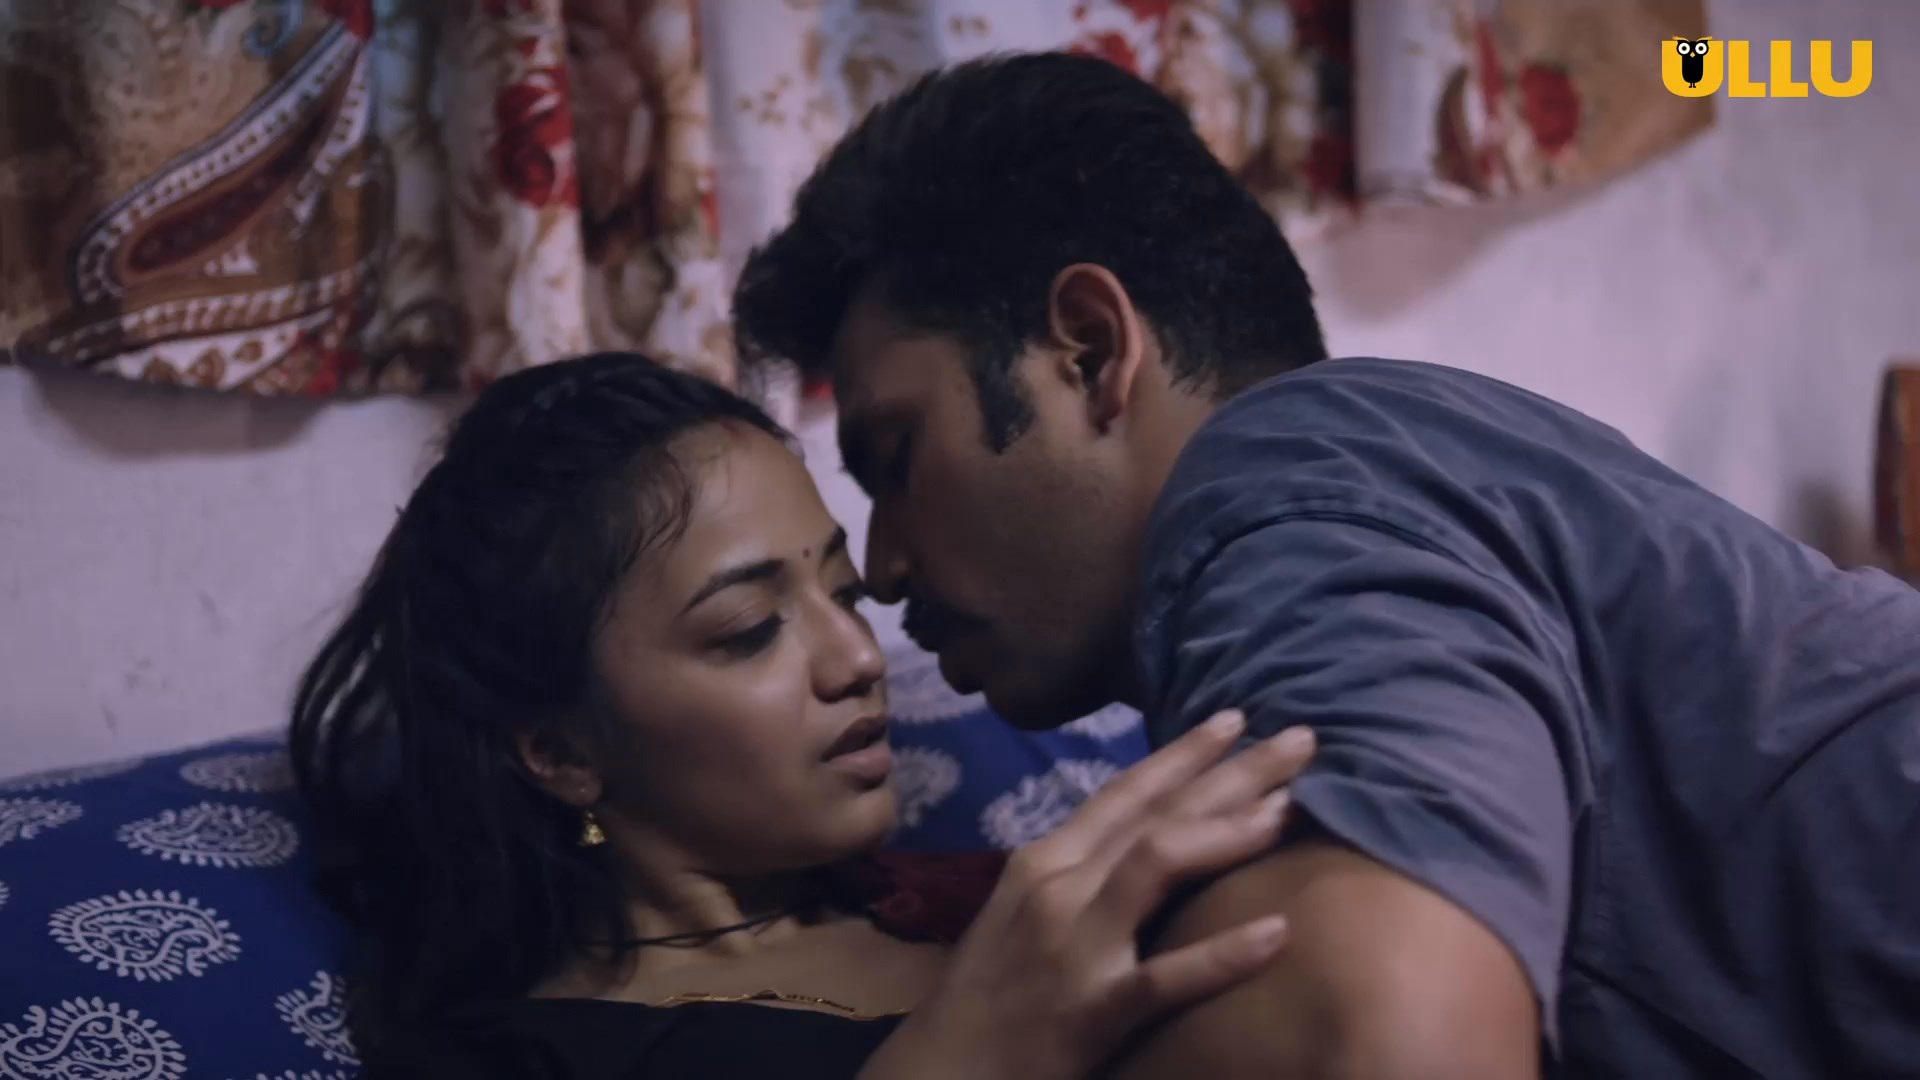 dawnlod Holiwood sex film 1080 size Hindi dawnlod